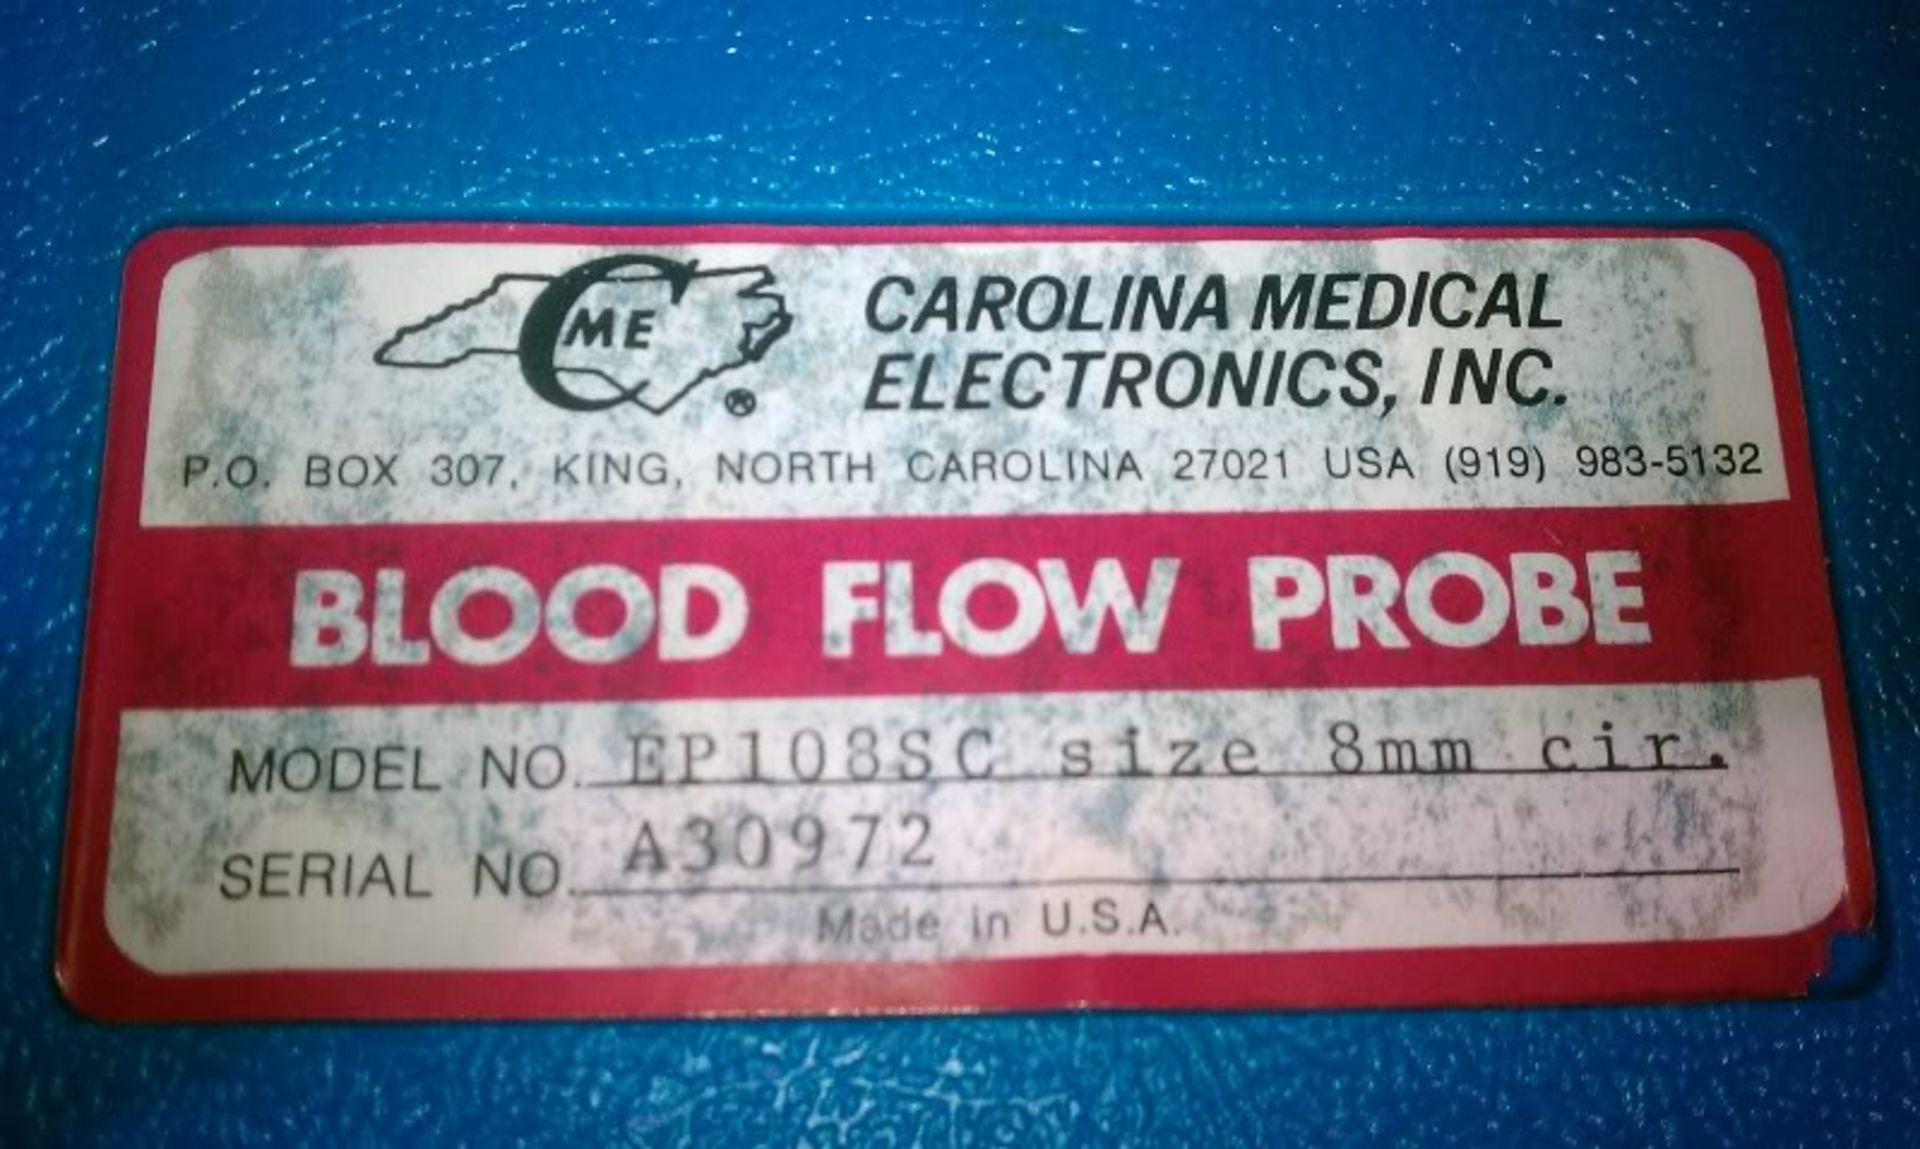 CME: Carolina Medical, Model EP108 SC Blood Flow Probe, Qty 1, 221497233337 - Image 4 of 4